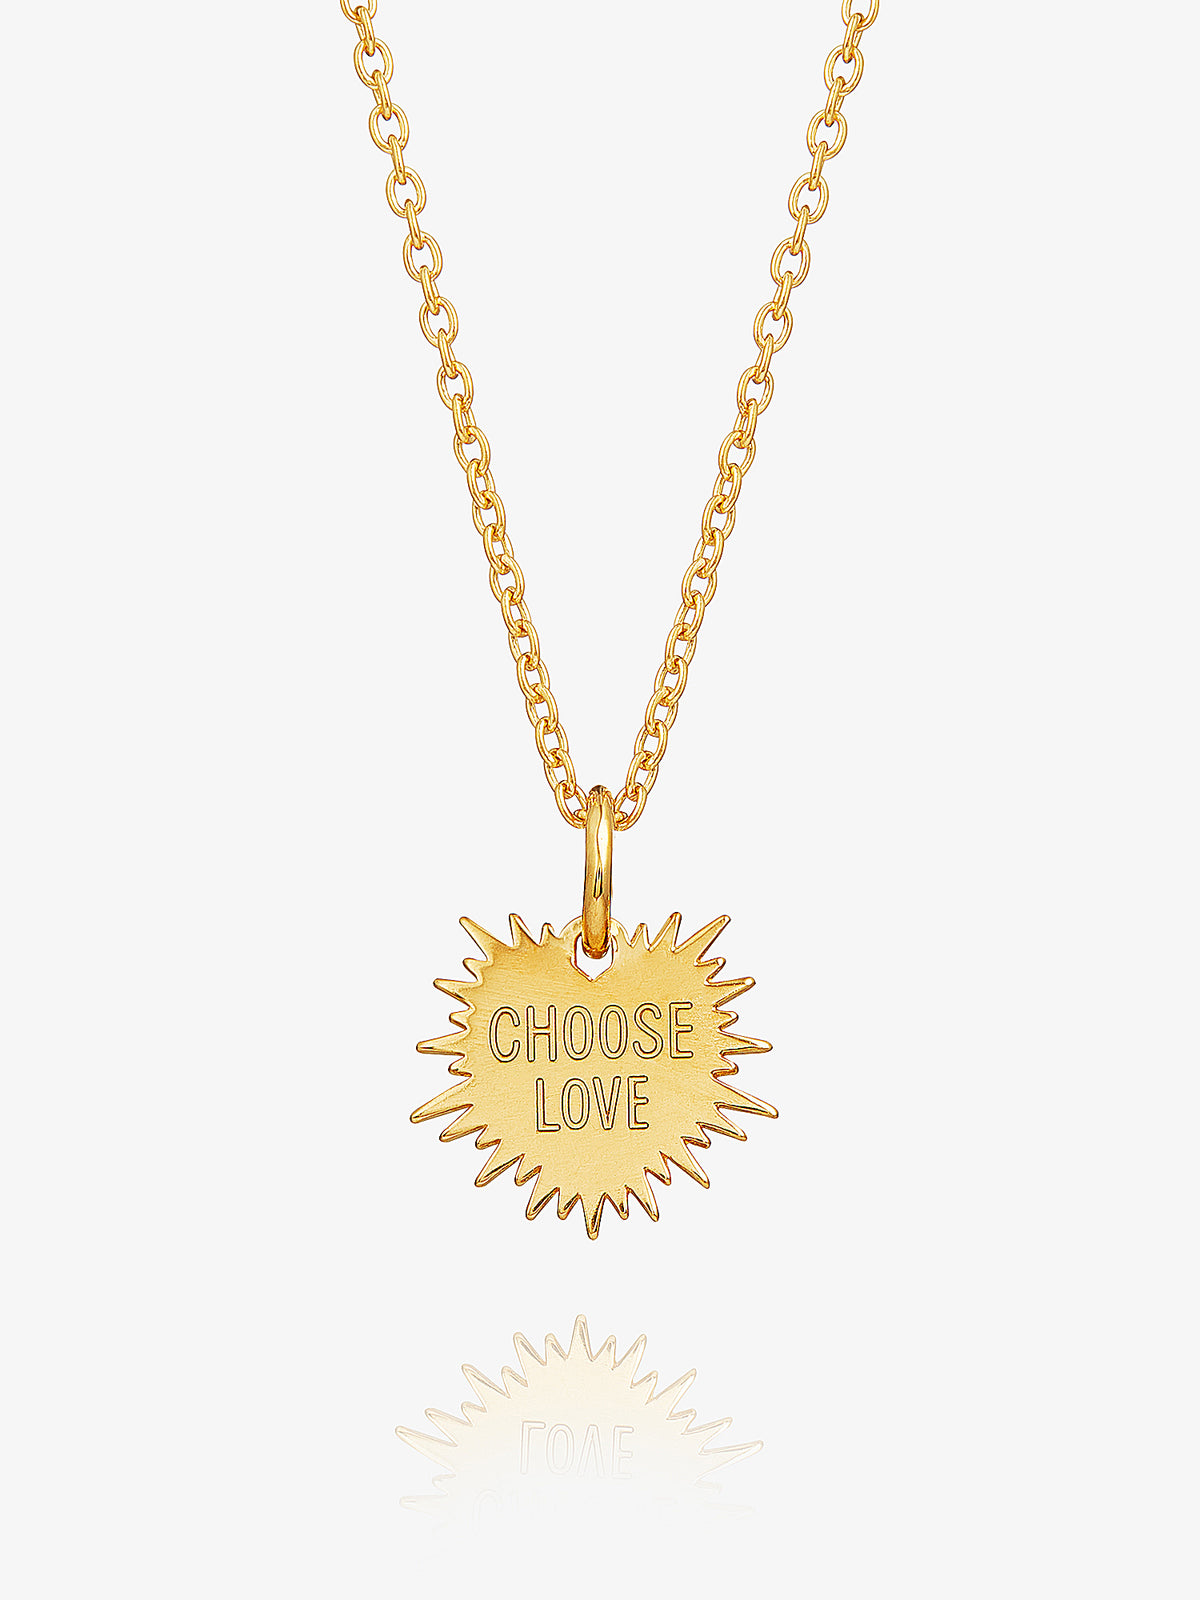 RJ x Nicola Coughlan For Choose Love Necklace